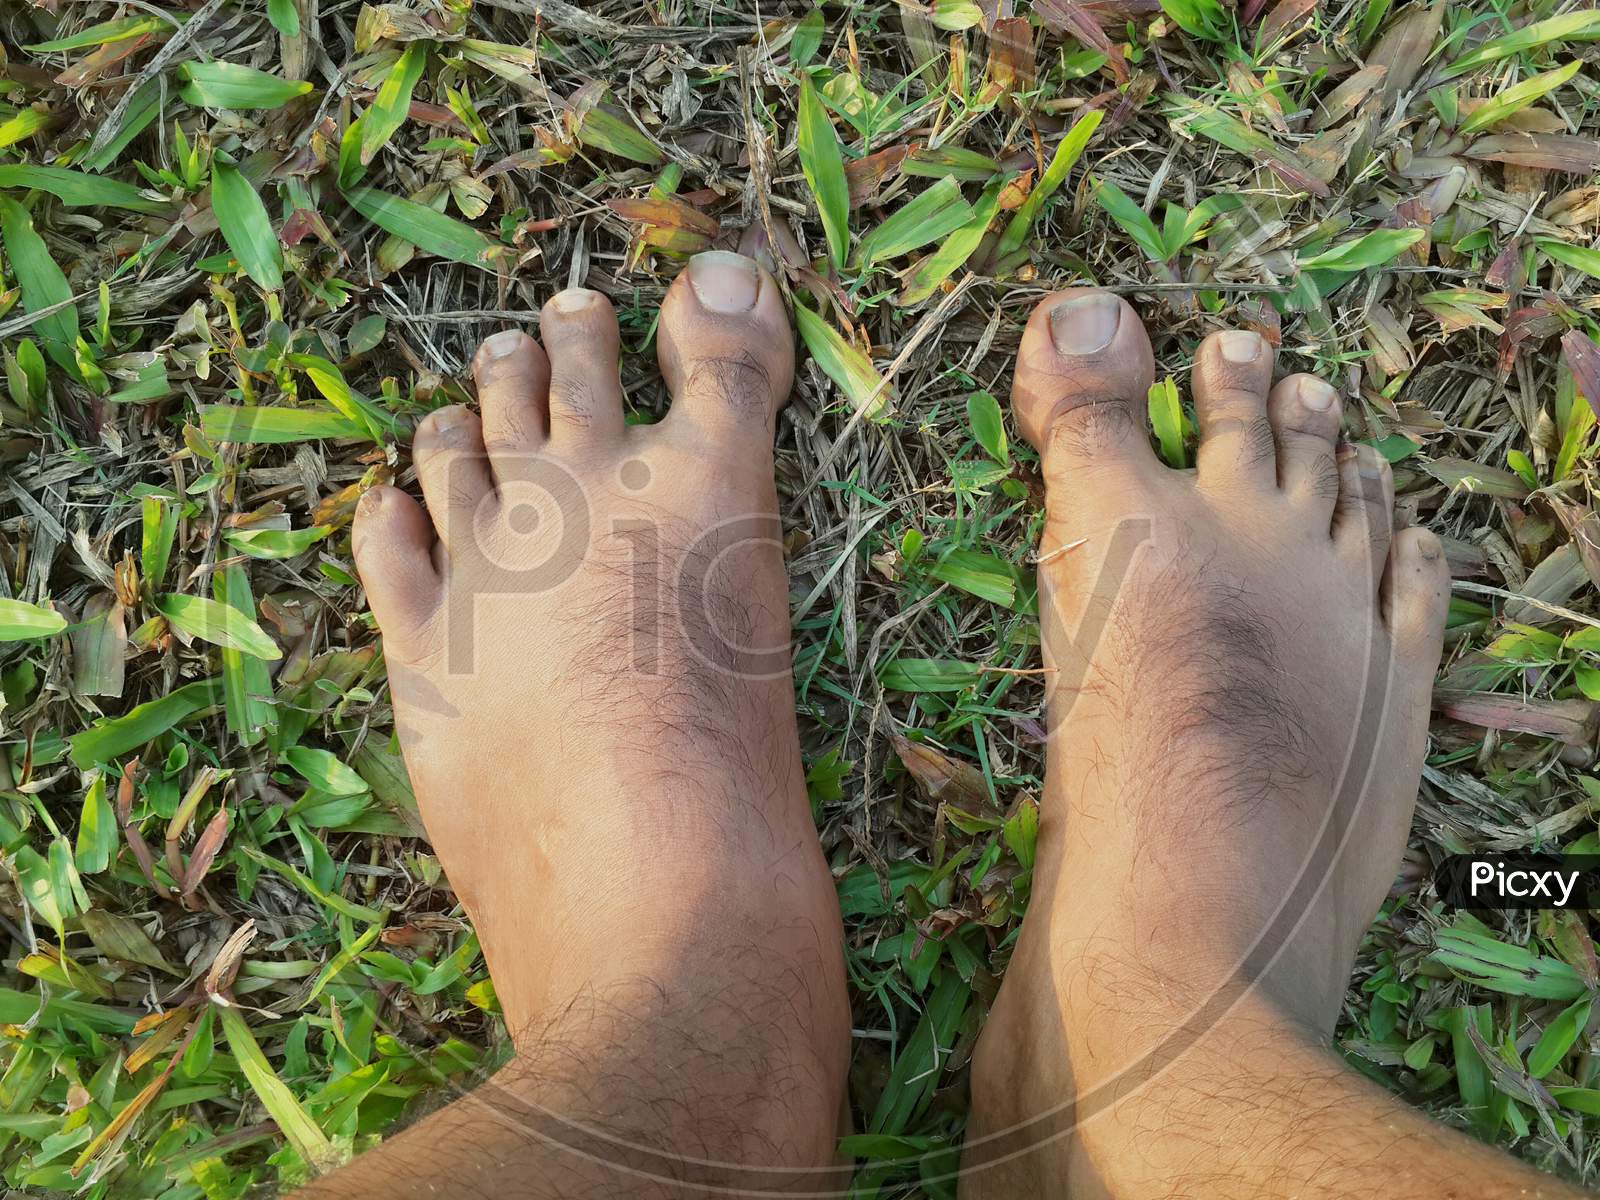 Barefoot standing on grass